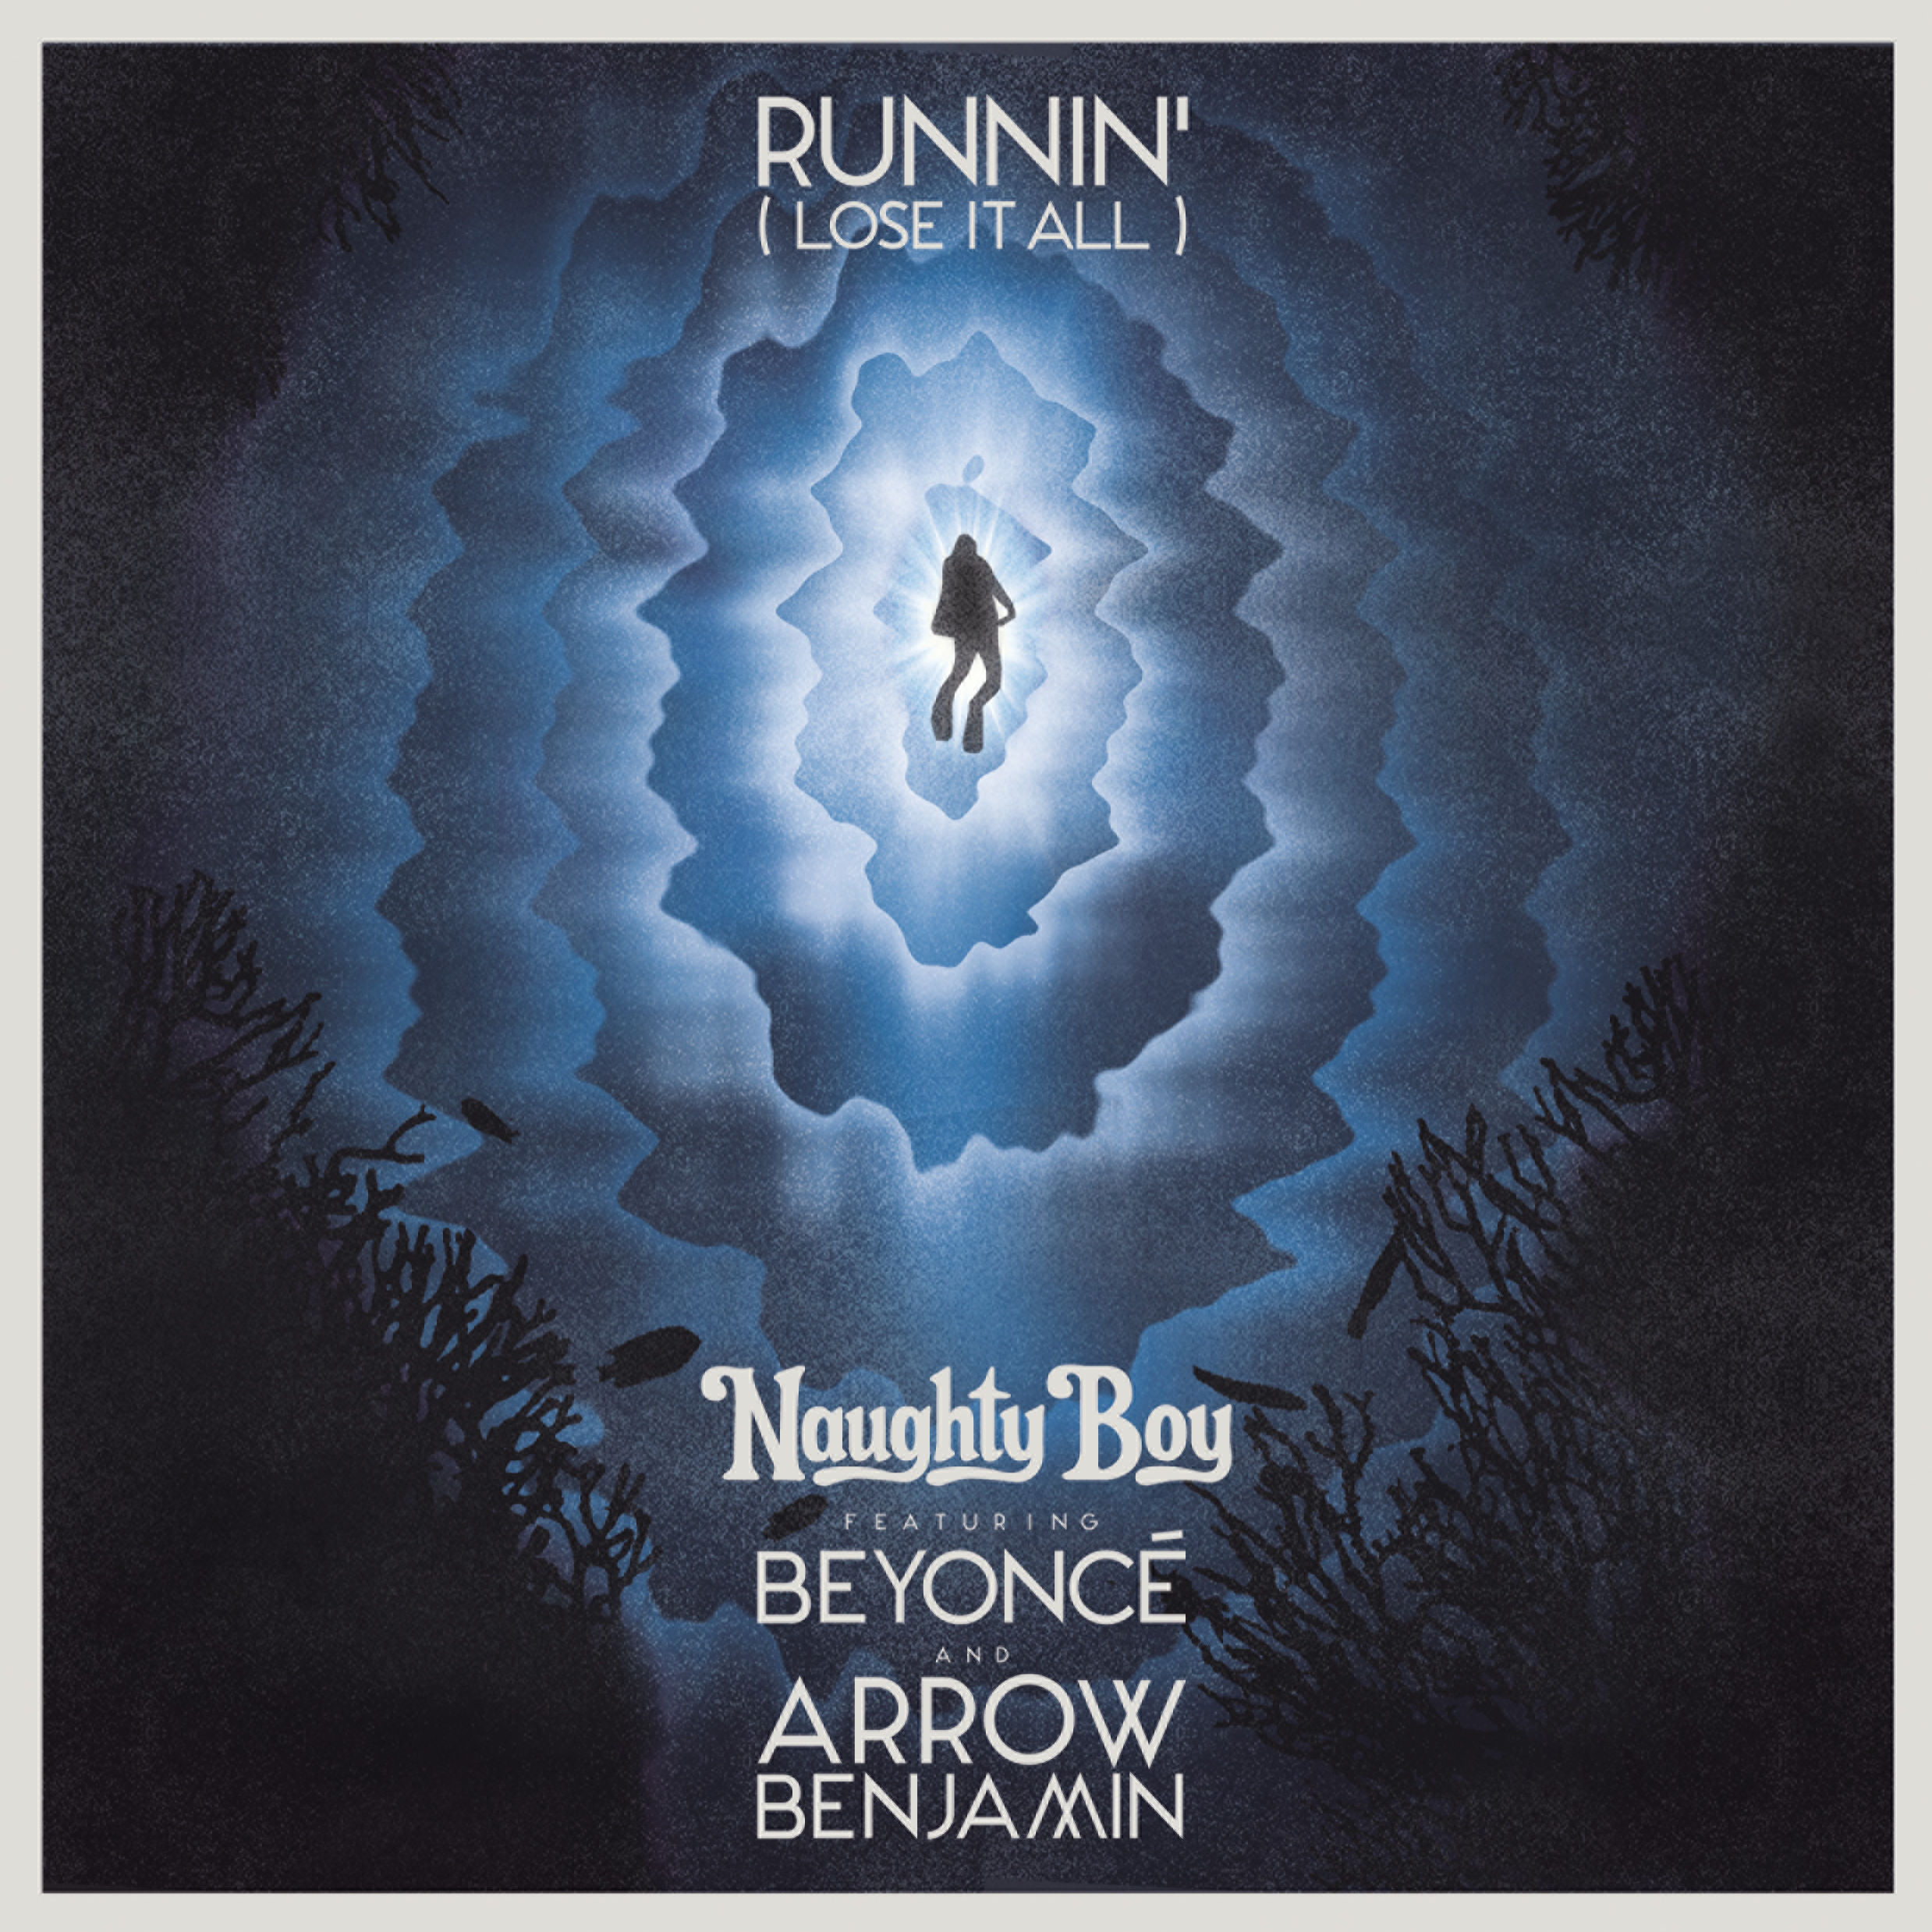 Naughty Boy – Runnin’ (Lose It All) ft. Beyoncé, Arrow Benjamin 中文字幕MV